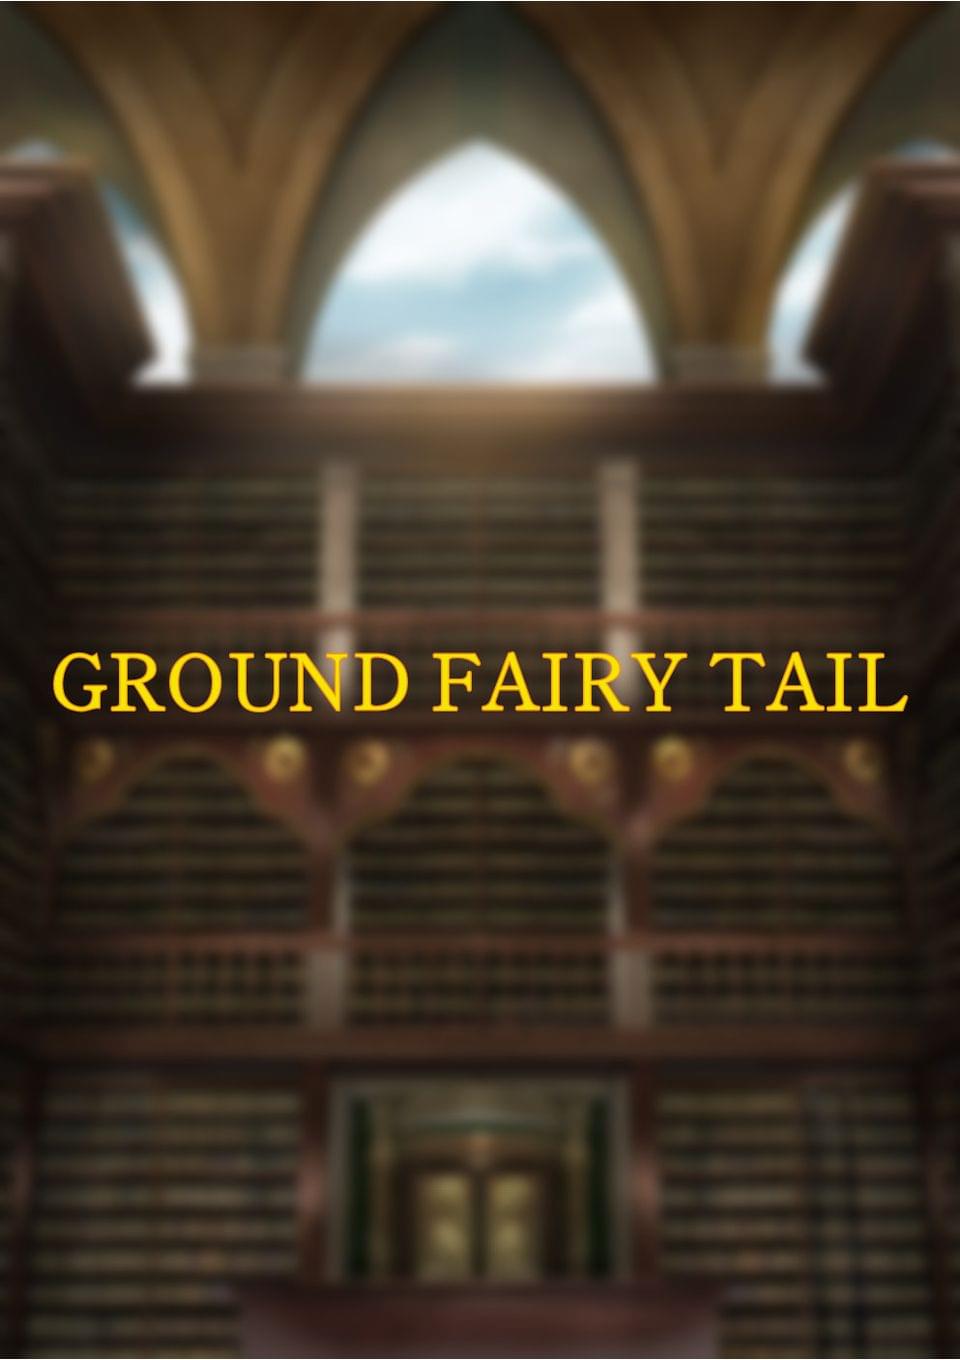 GROUND FAIRY TAIL